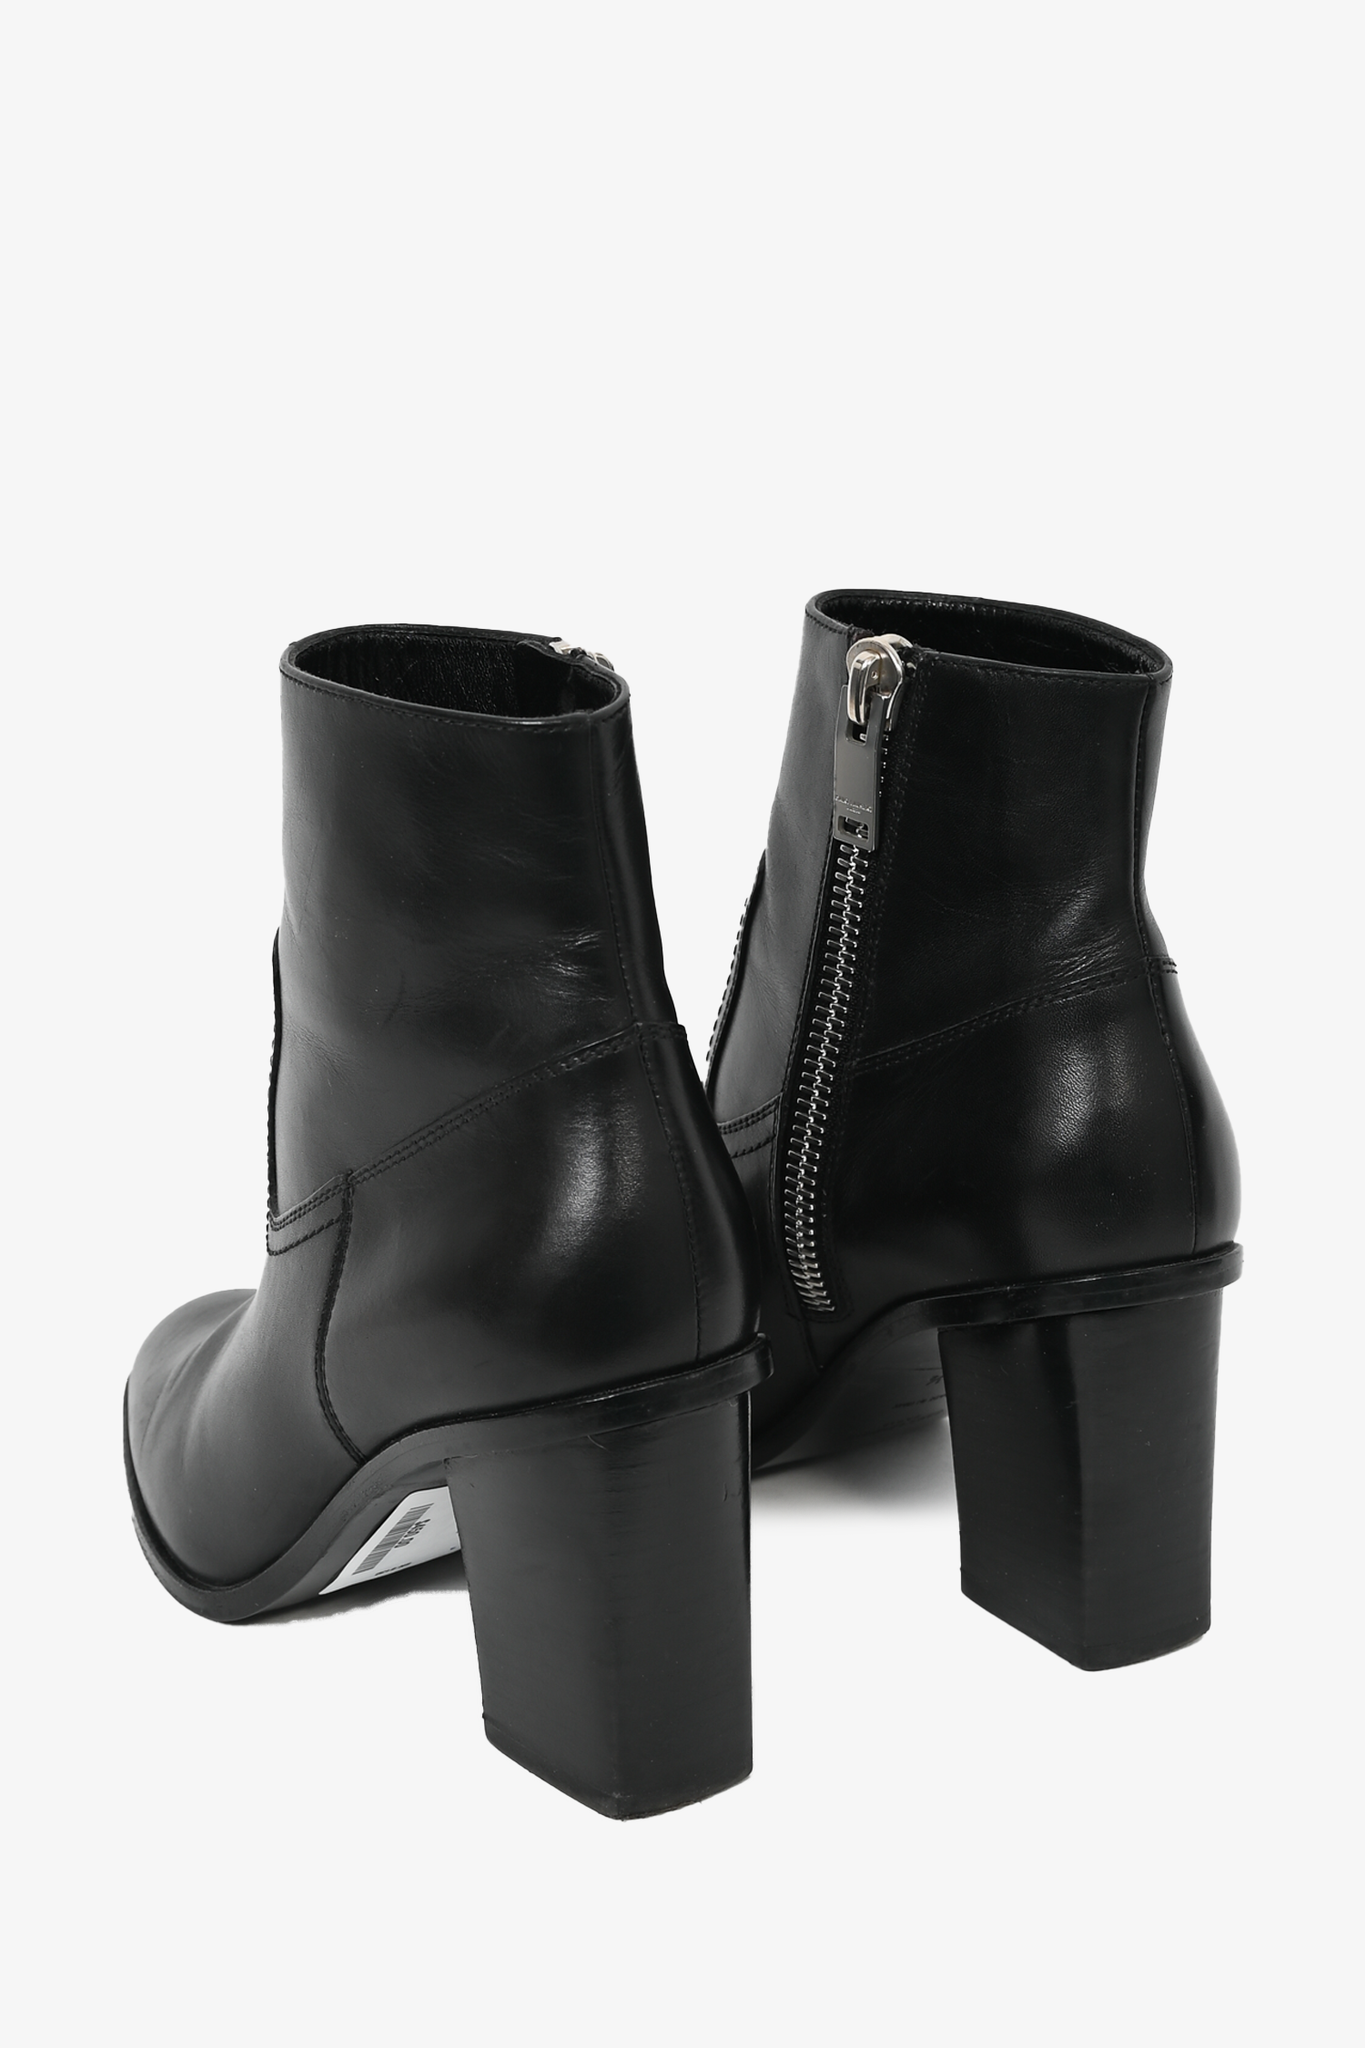 Saint Laurent Black Leather Heeled Boots Size 36.5